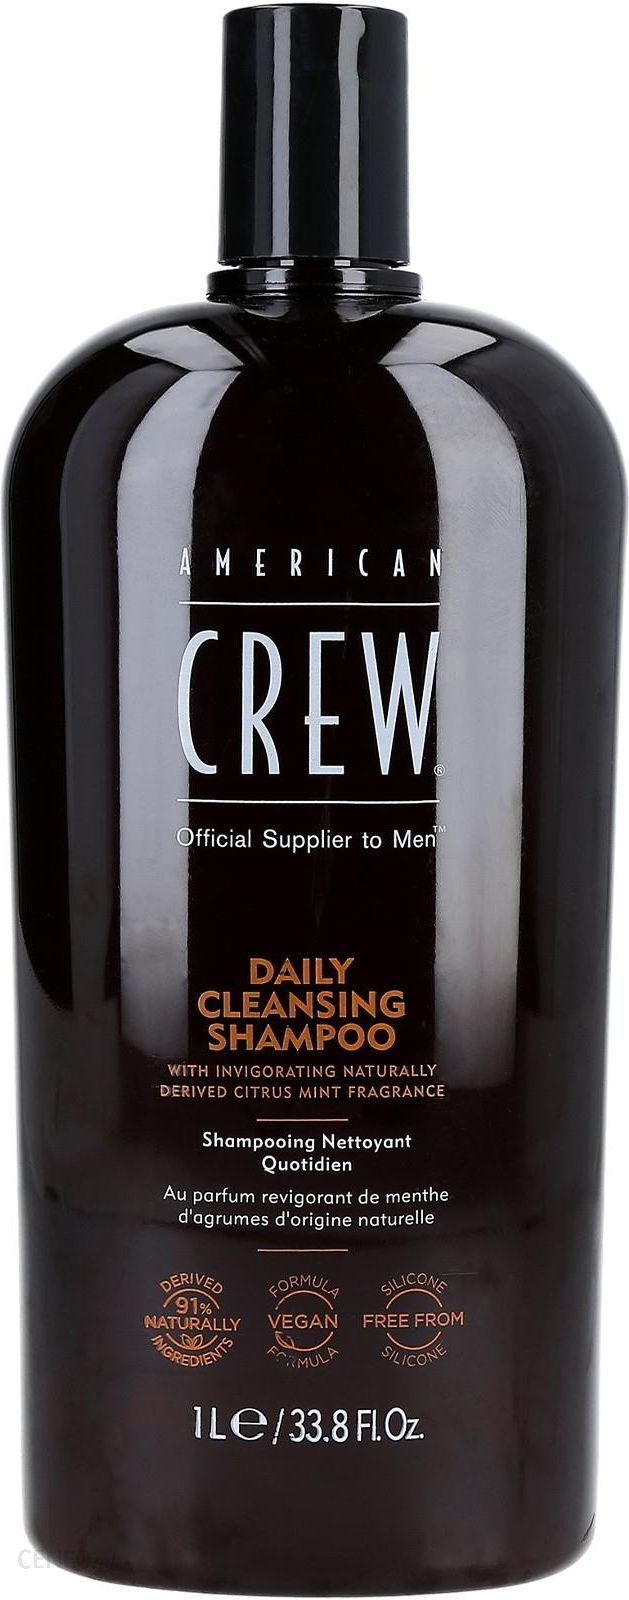 american crew szampon opinie